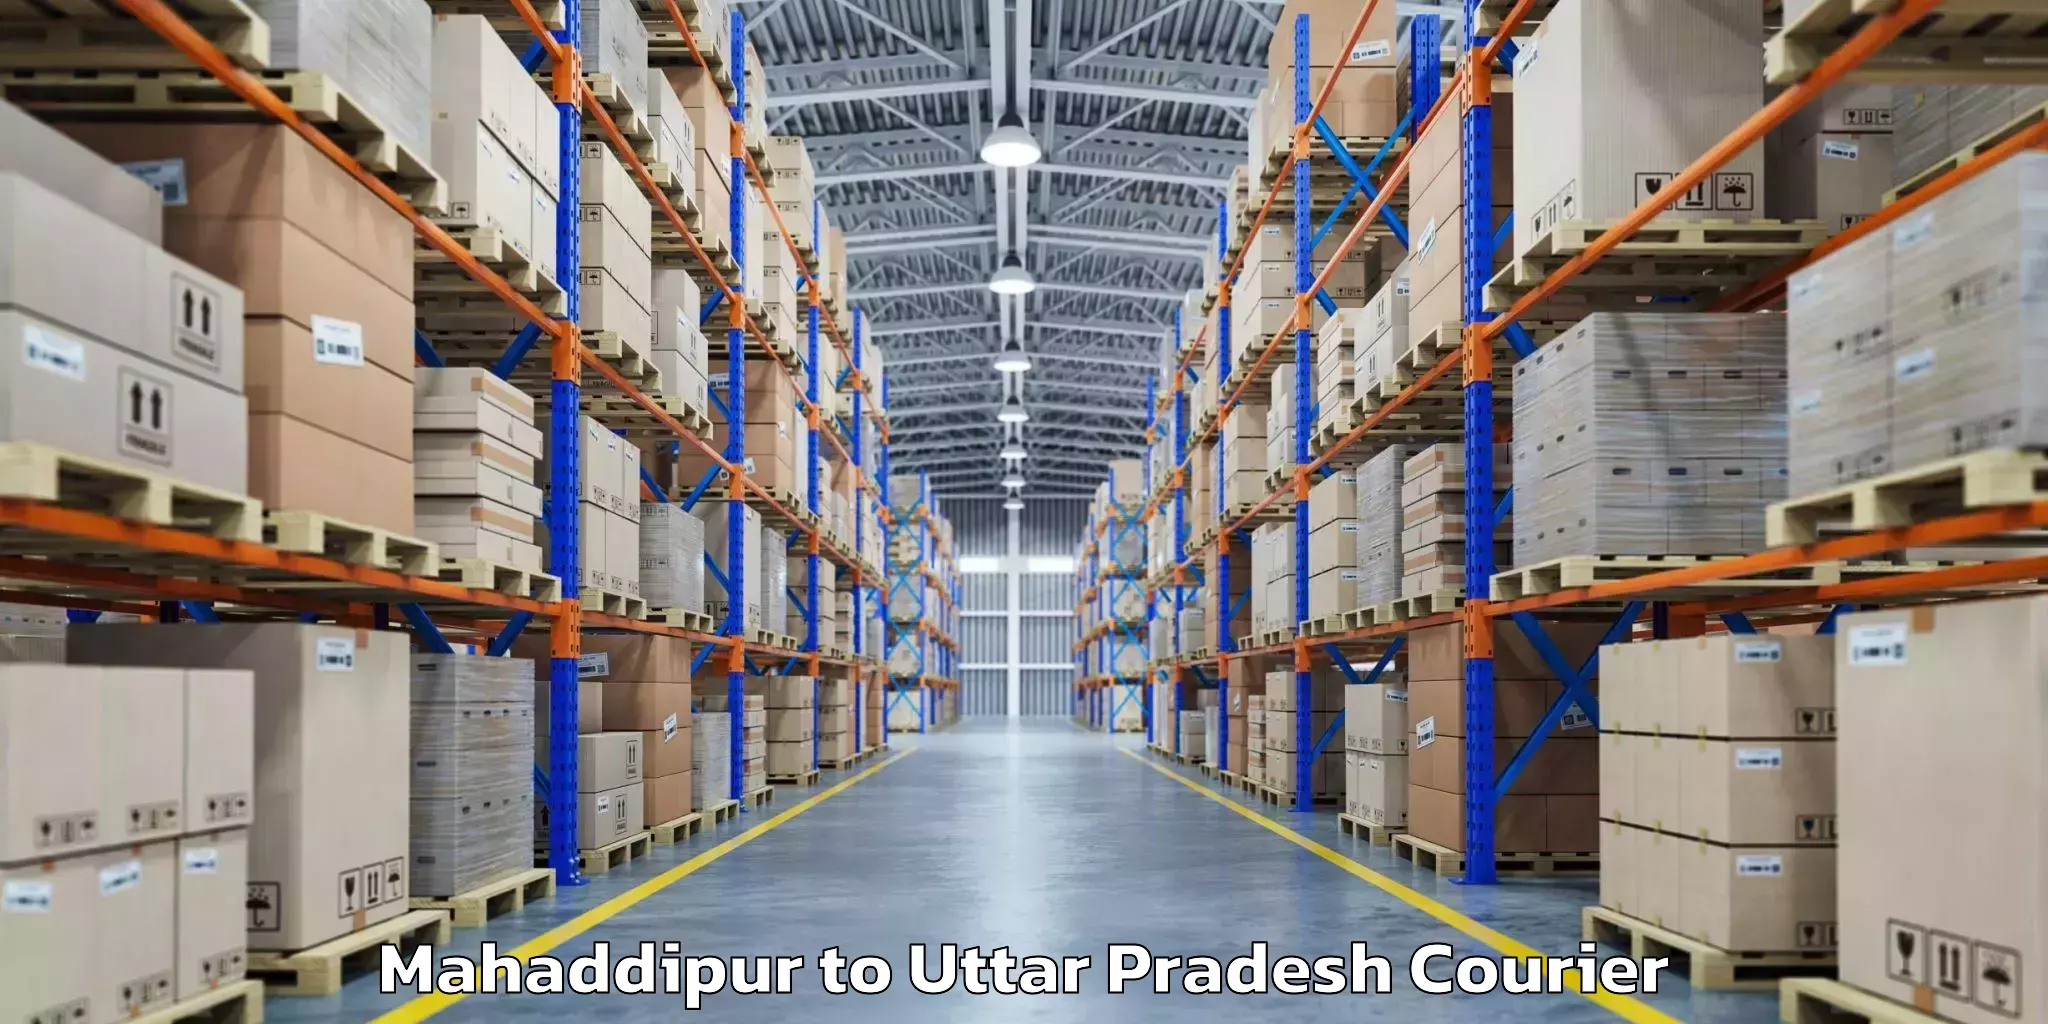 Baggage shipping experts Mahaddipur to Kanpur